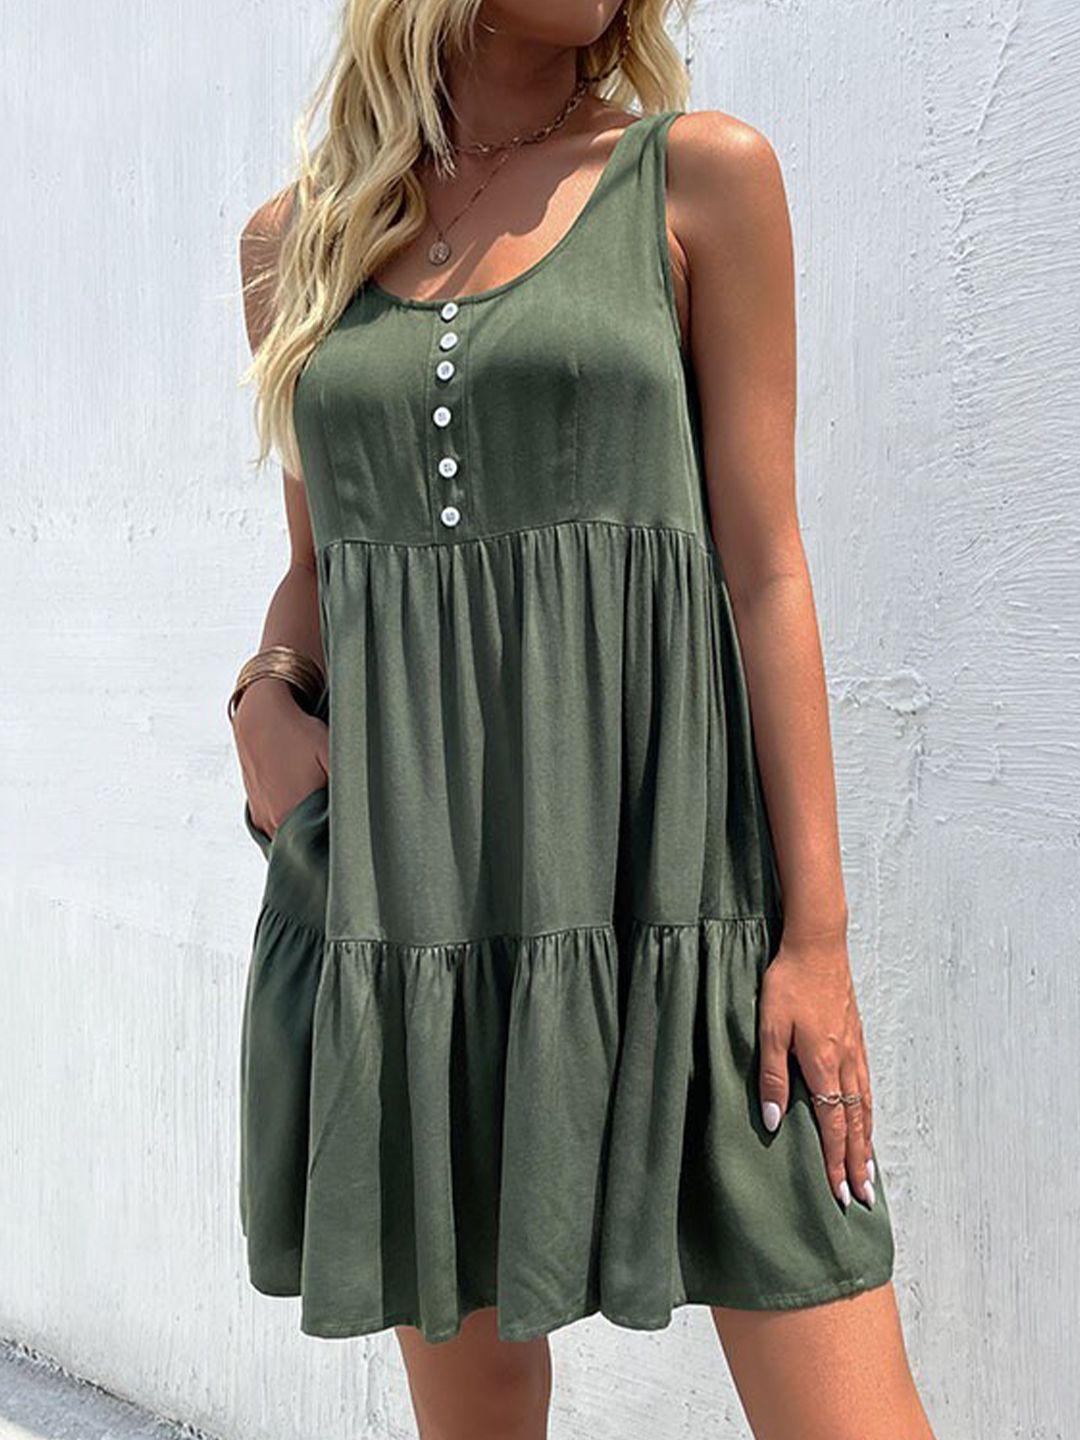 stylecast green midi dress